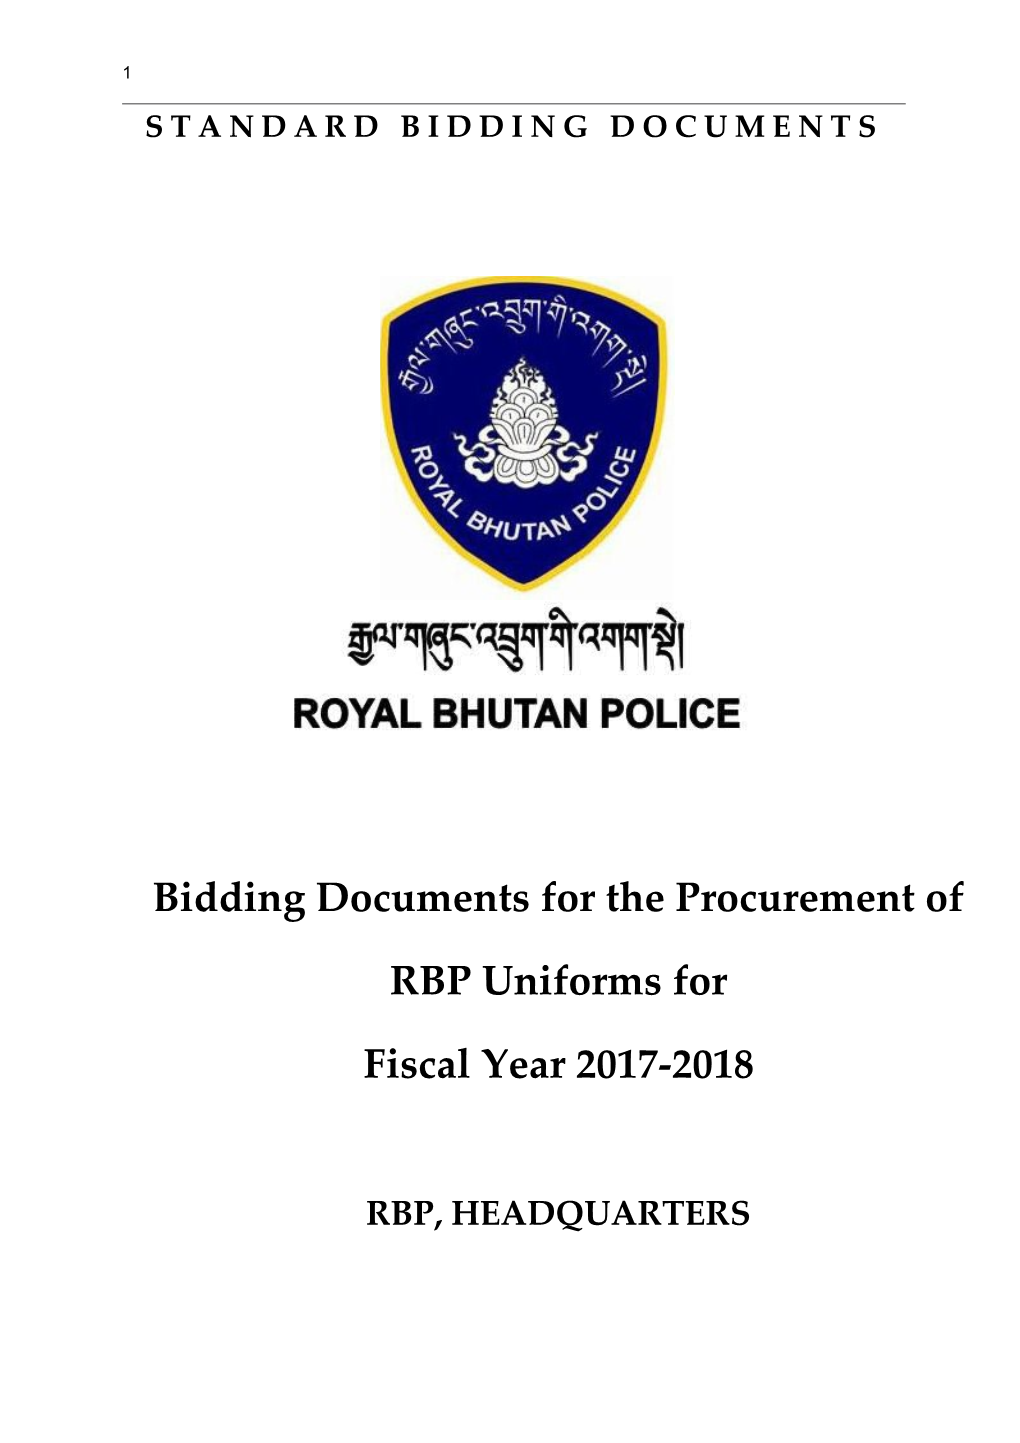 Bidding Documents for the Procurement of RBP Uniforms For